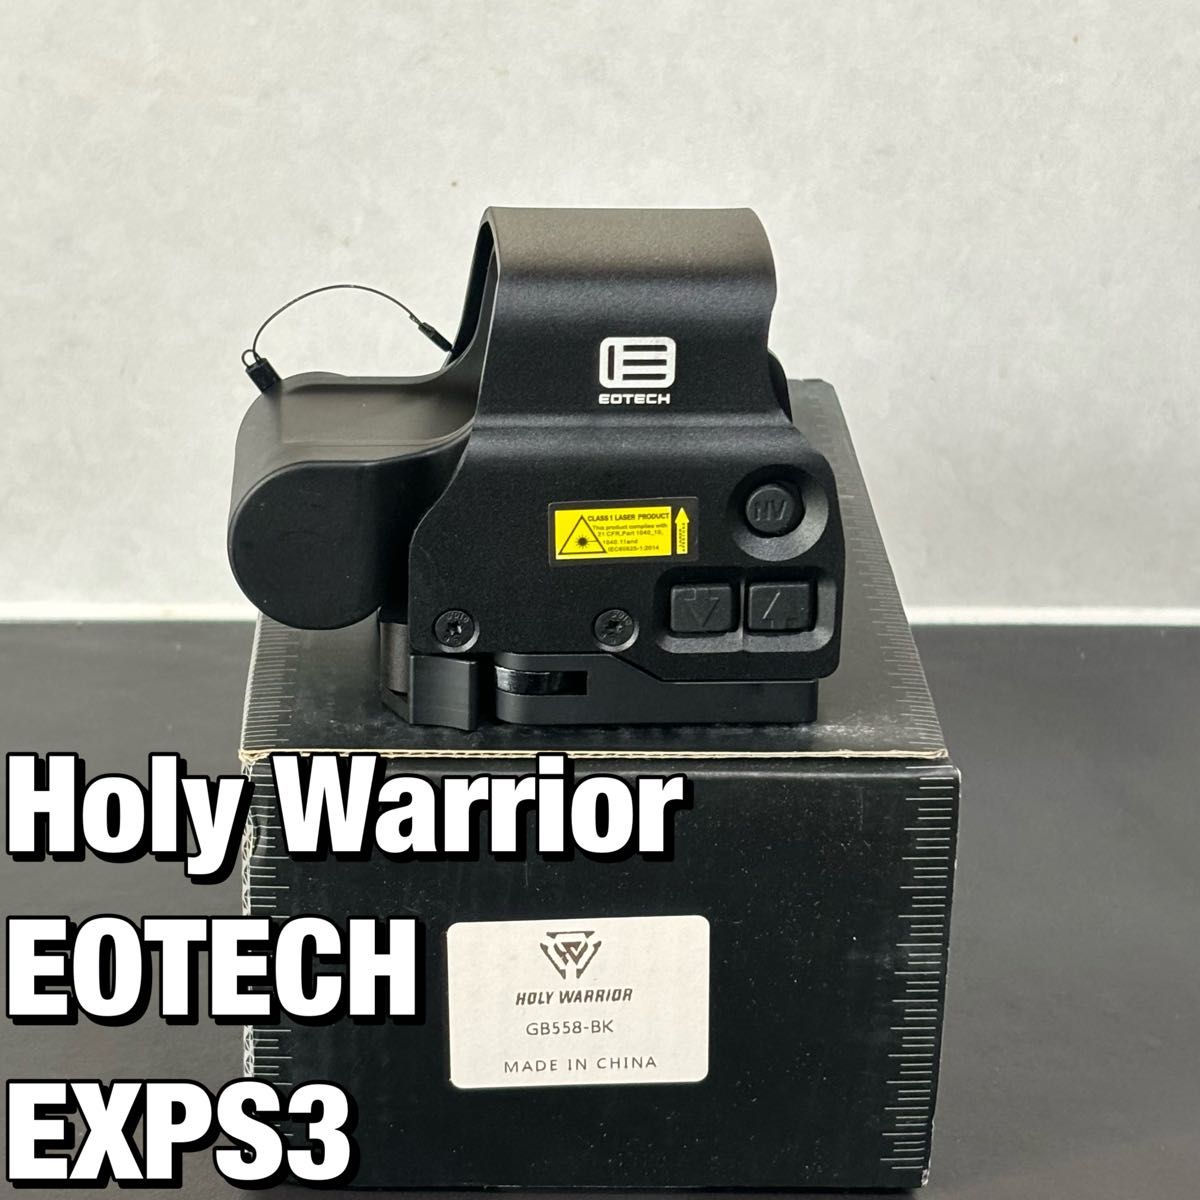 Holy Warrior Eotech EXPS3/558x ホーリーウォリア イオテック ホロサイト/M4/HK416